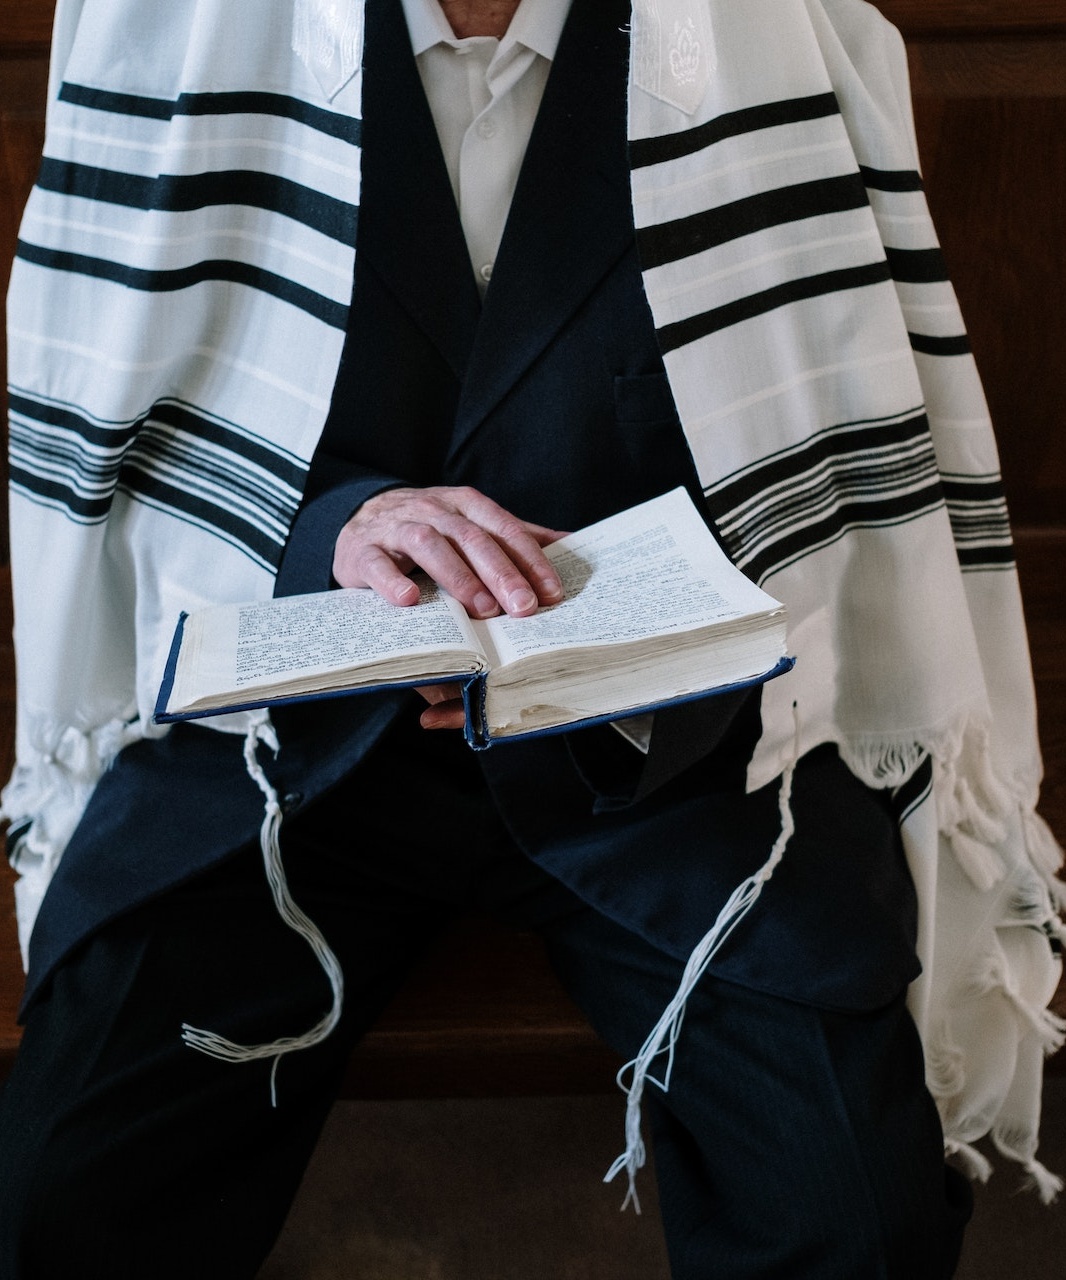 Yom Kippur Services at Beth El Temple